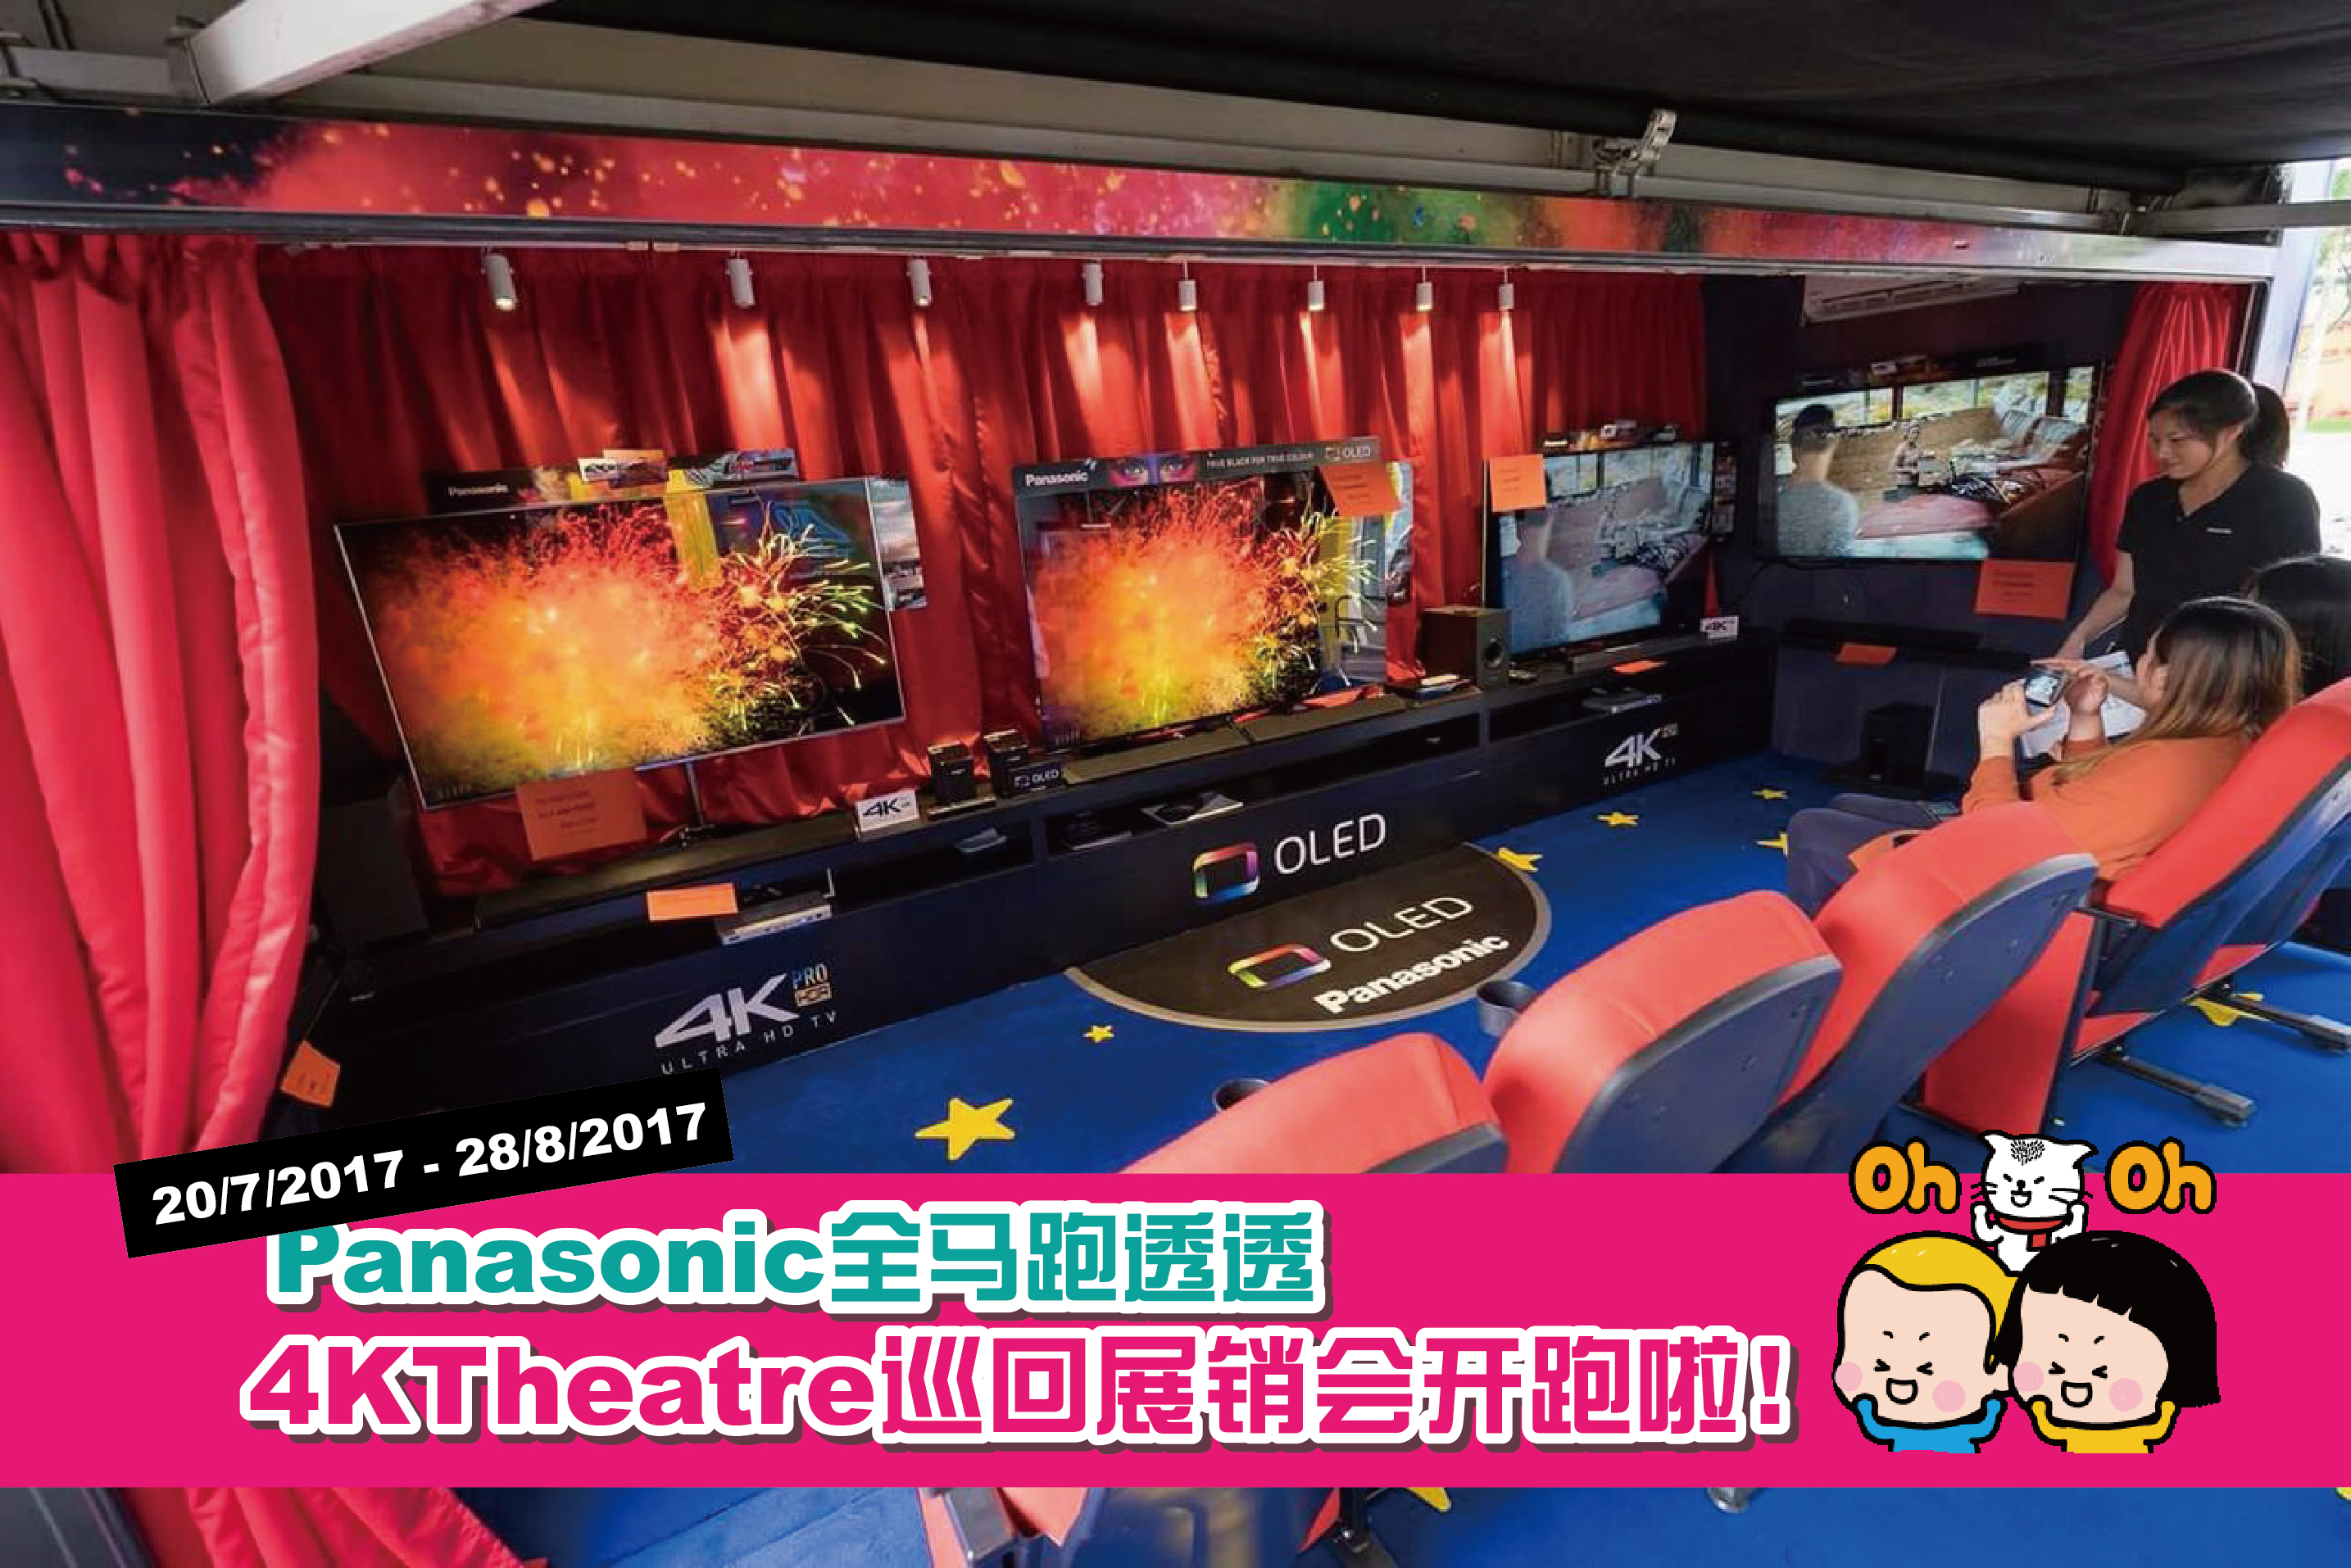 Panasonic 4K Theatre Roadshow 来到槟城咯！